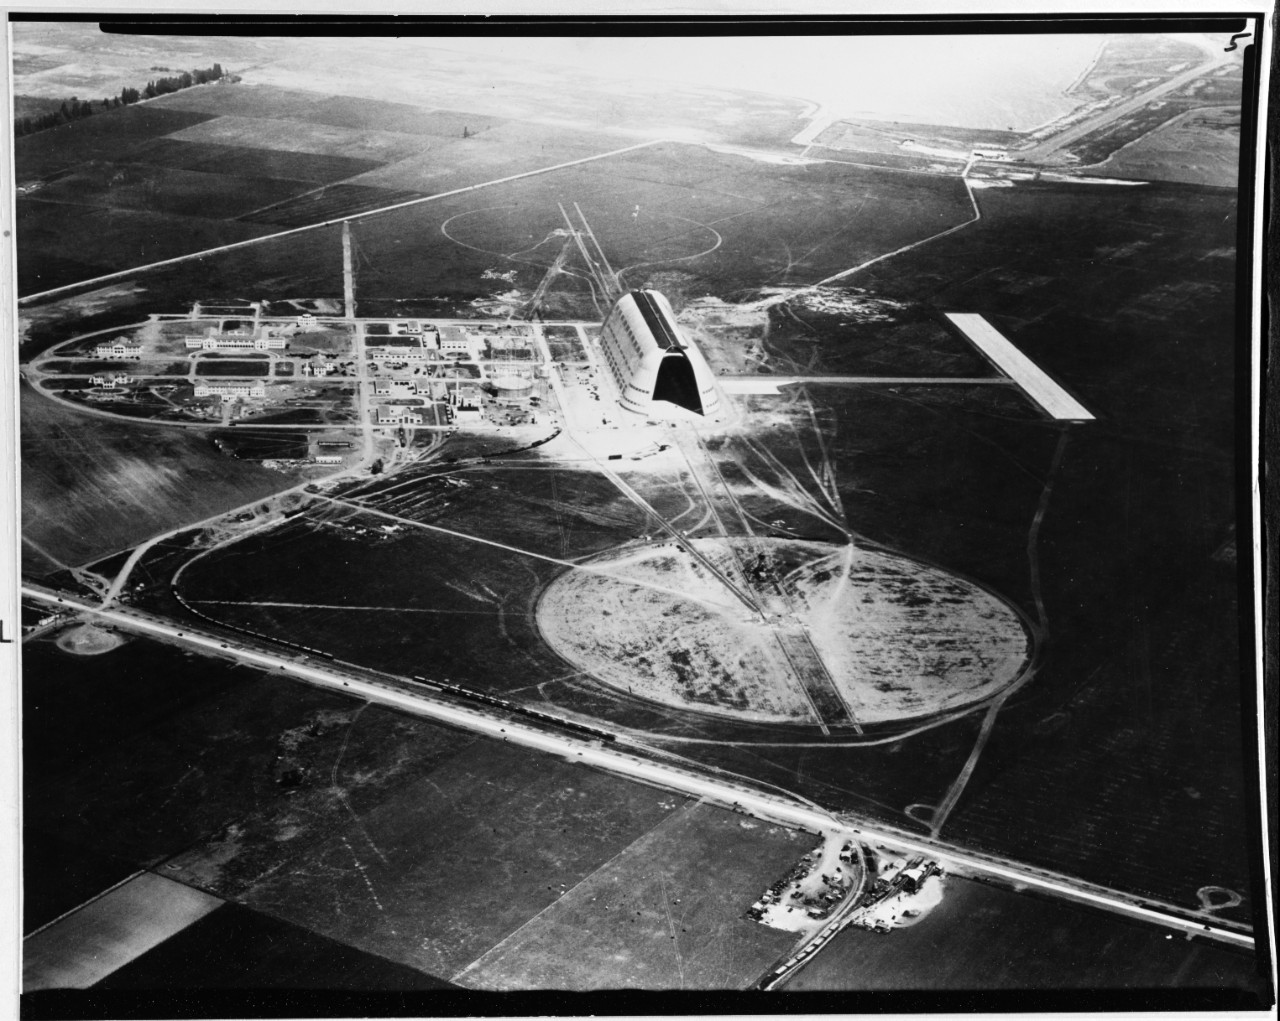 Naval Air Station Sunnyvale, California (Moffett Field)